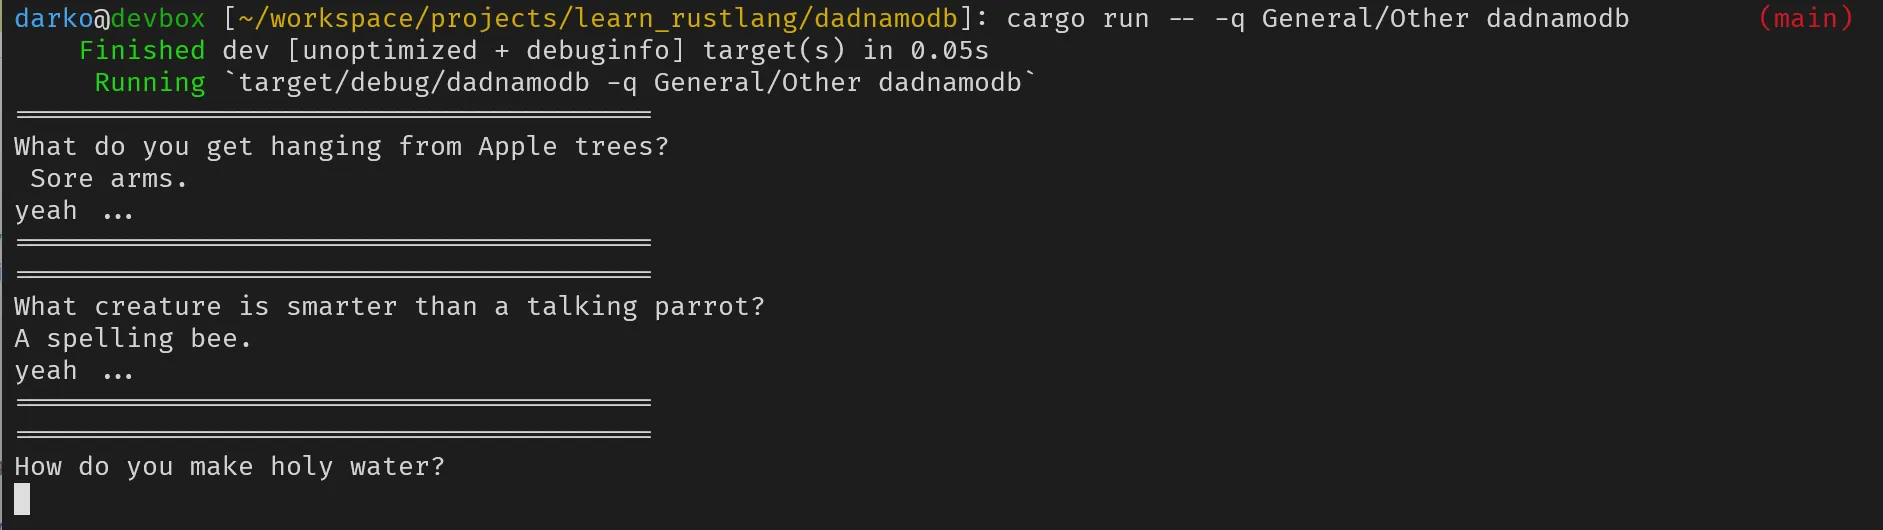 screenshot of the dadnamodb application running